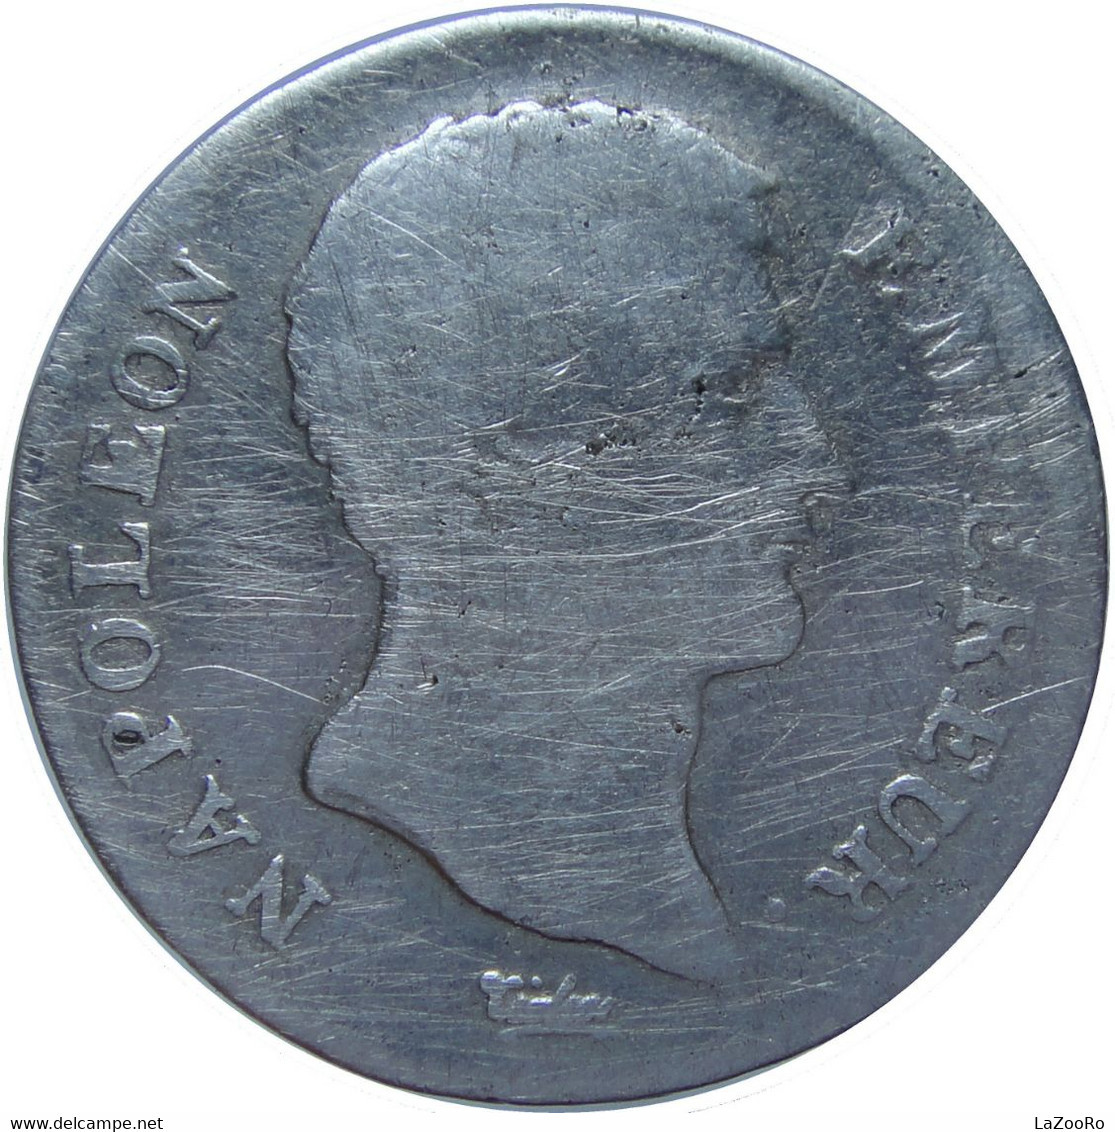 LaZooRo: France 1 Franc 1805 A VG - Silver - 1 Franc